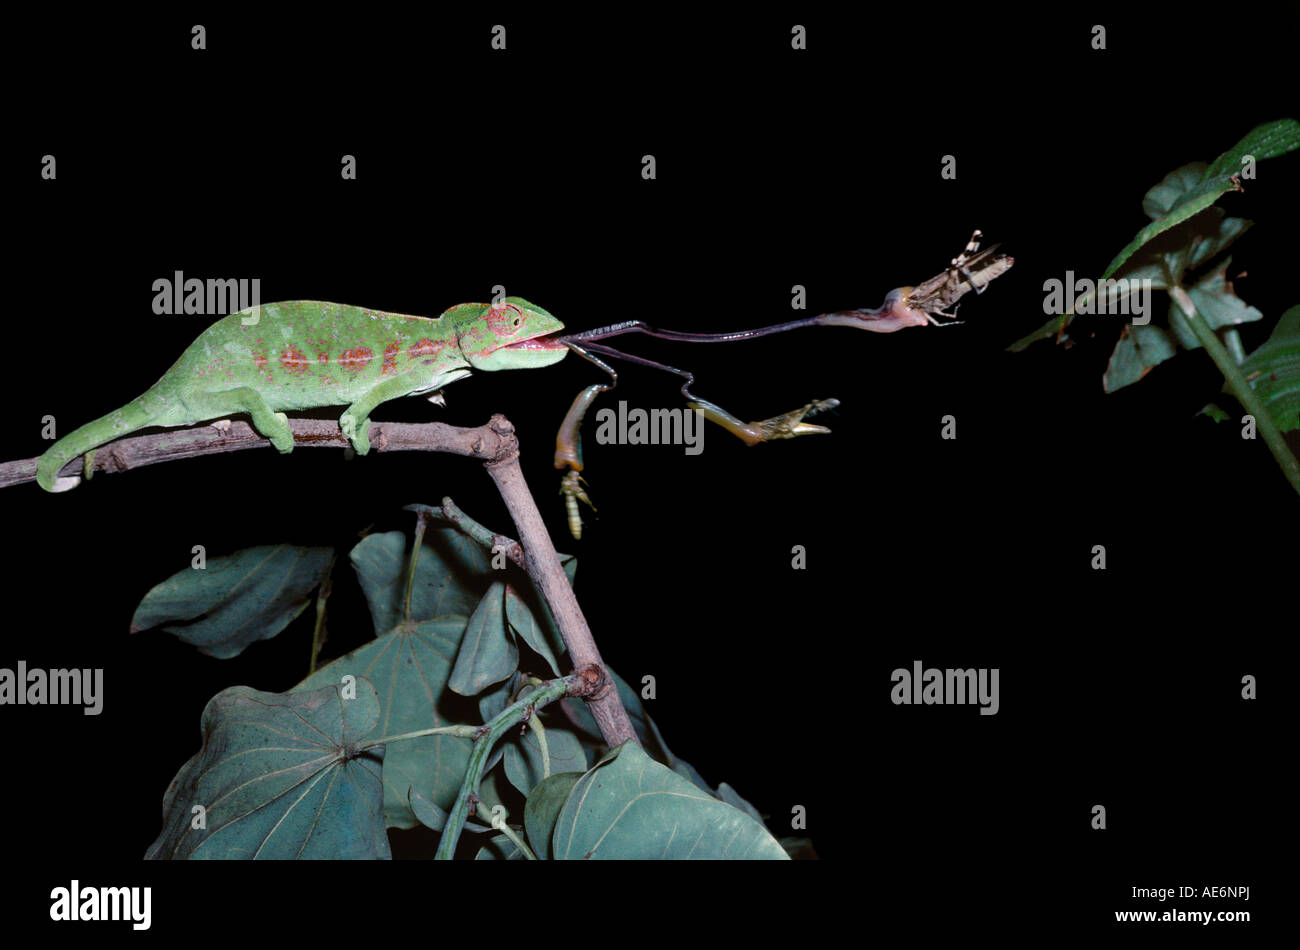 CHAMELEON Chameleo sp MADAGASCAR Caméléon capturant sa proie stroboscopic picture MADAGASCAR Stock Photo